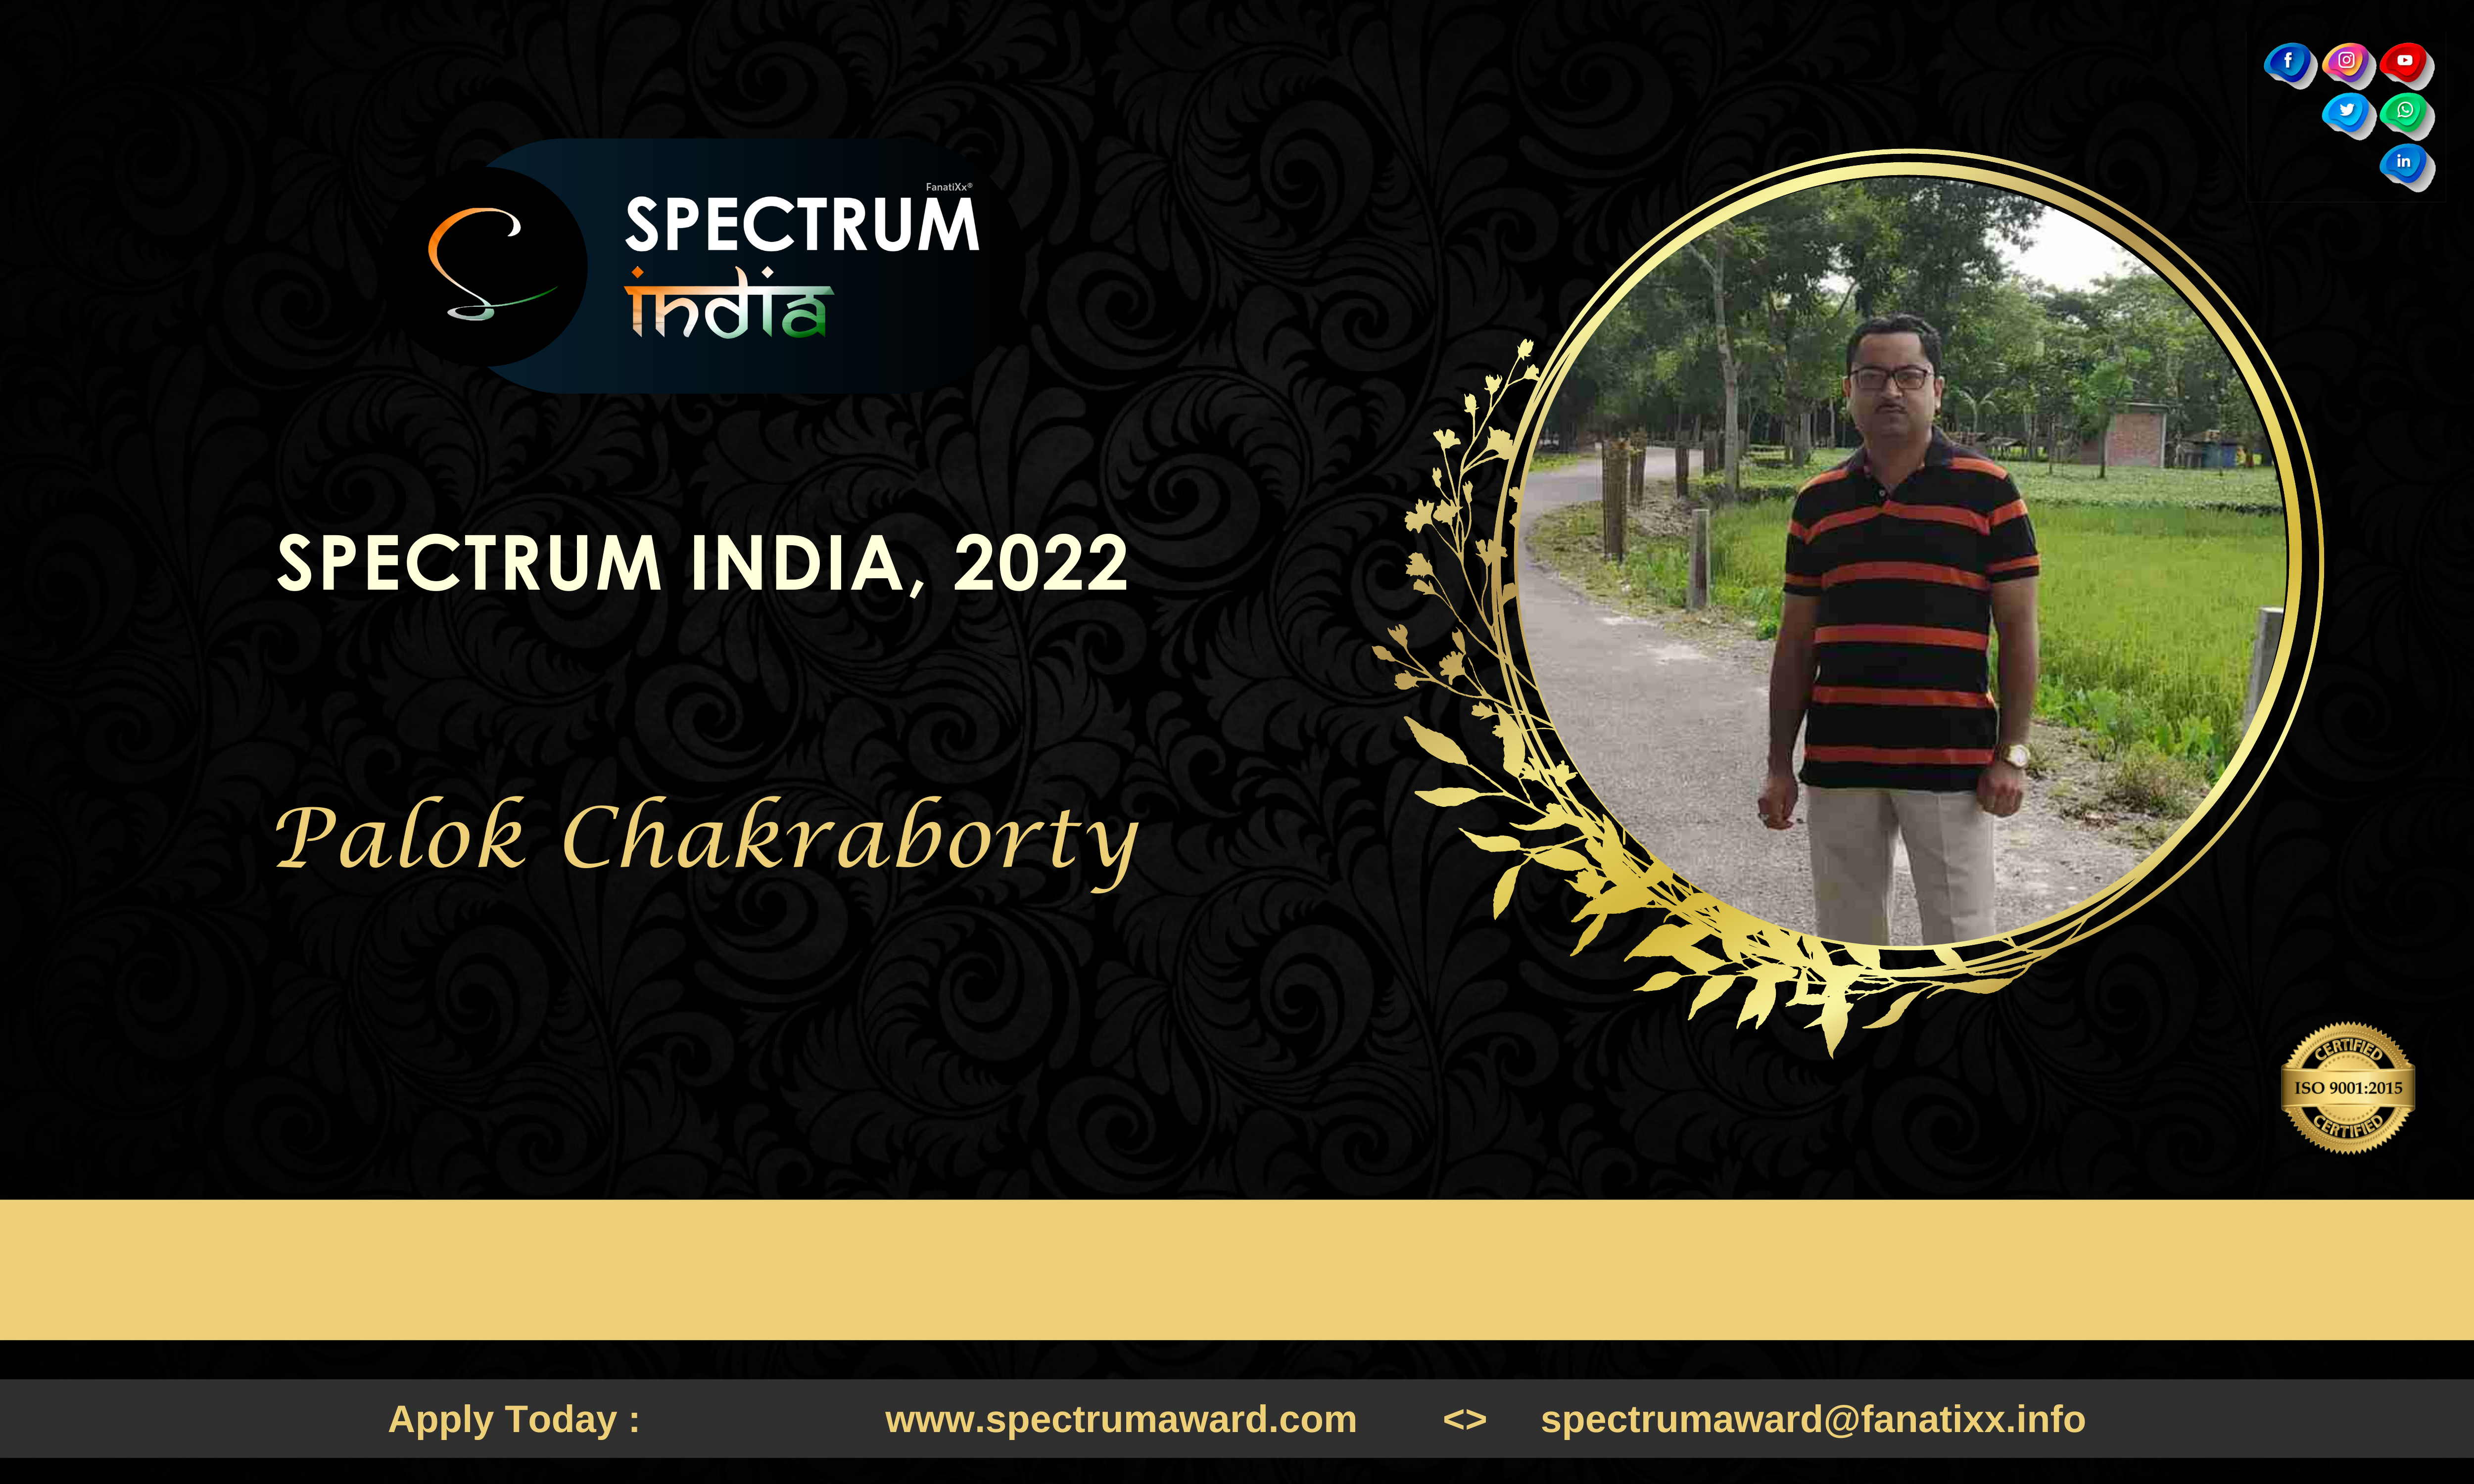 Life As An Adventure | Palok Chakraborty - Spectrum India, 2022